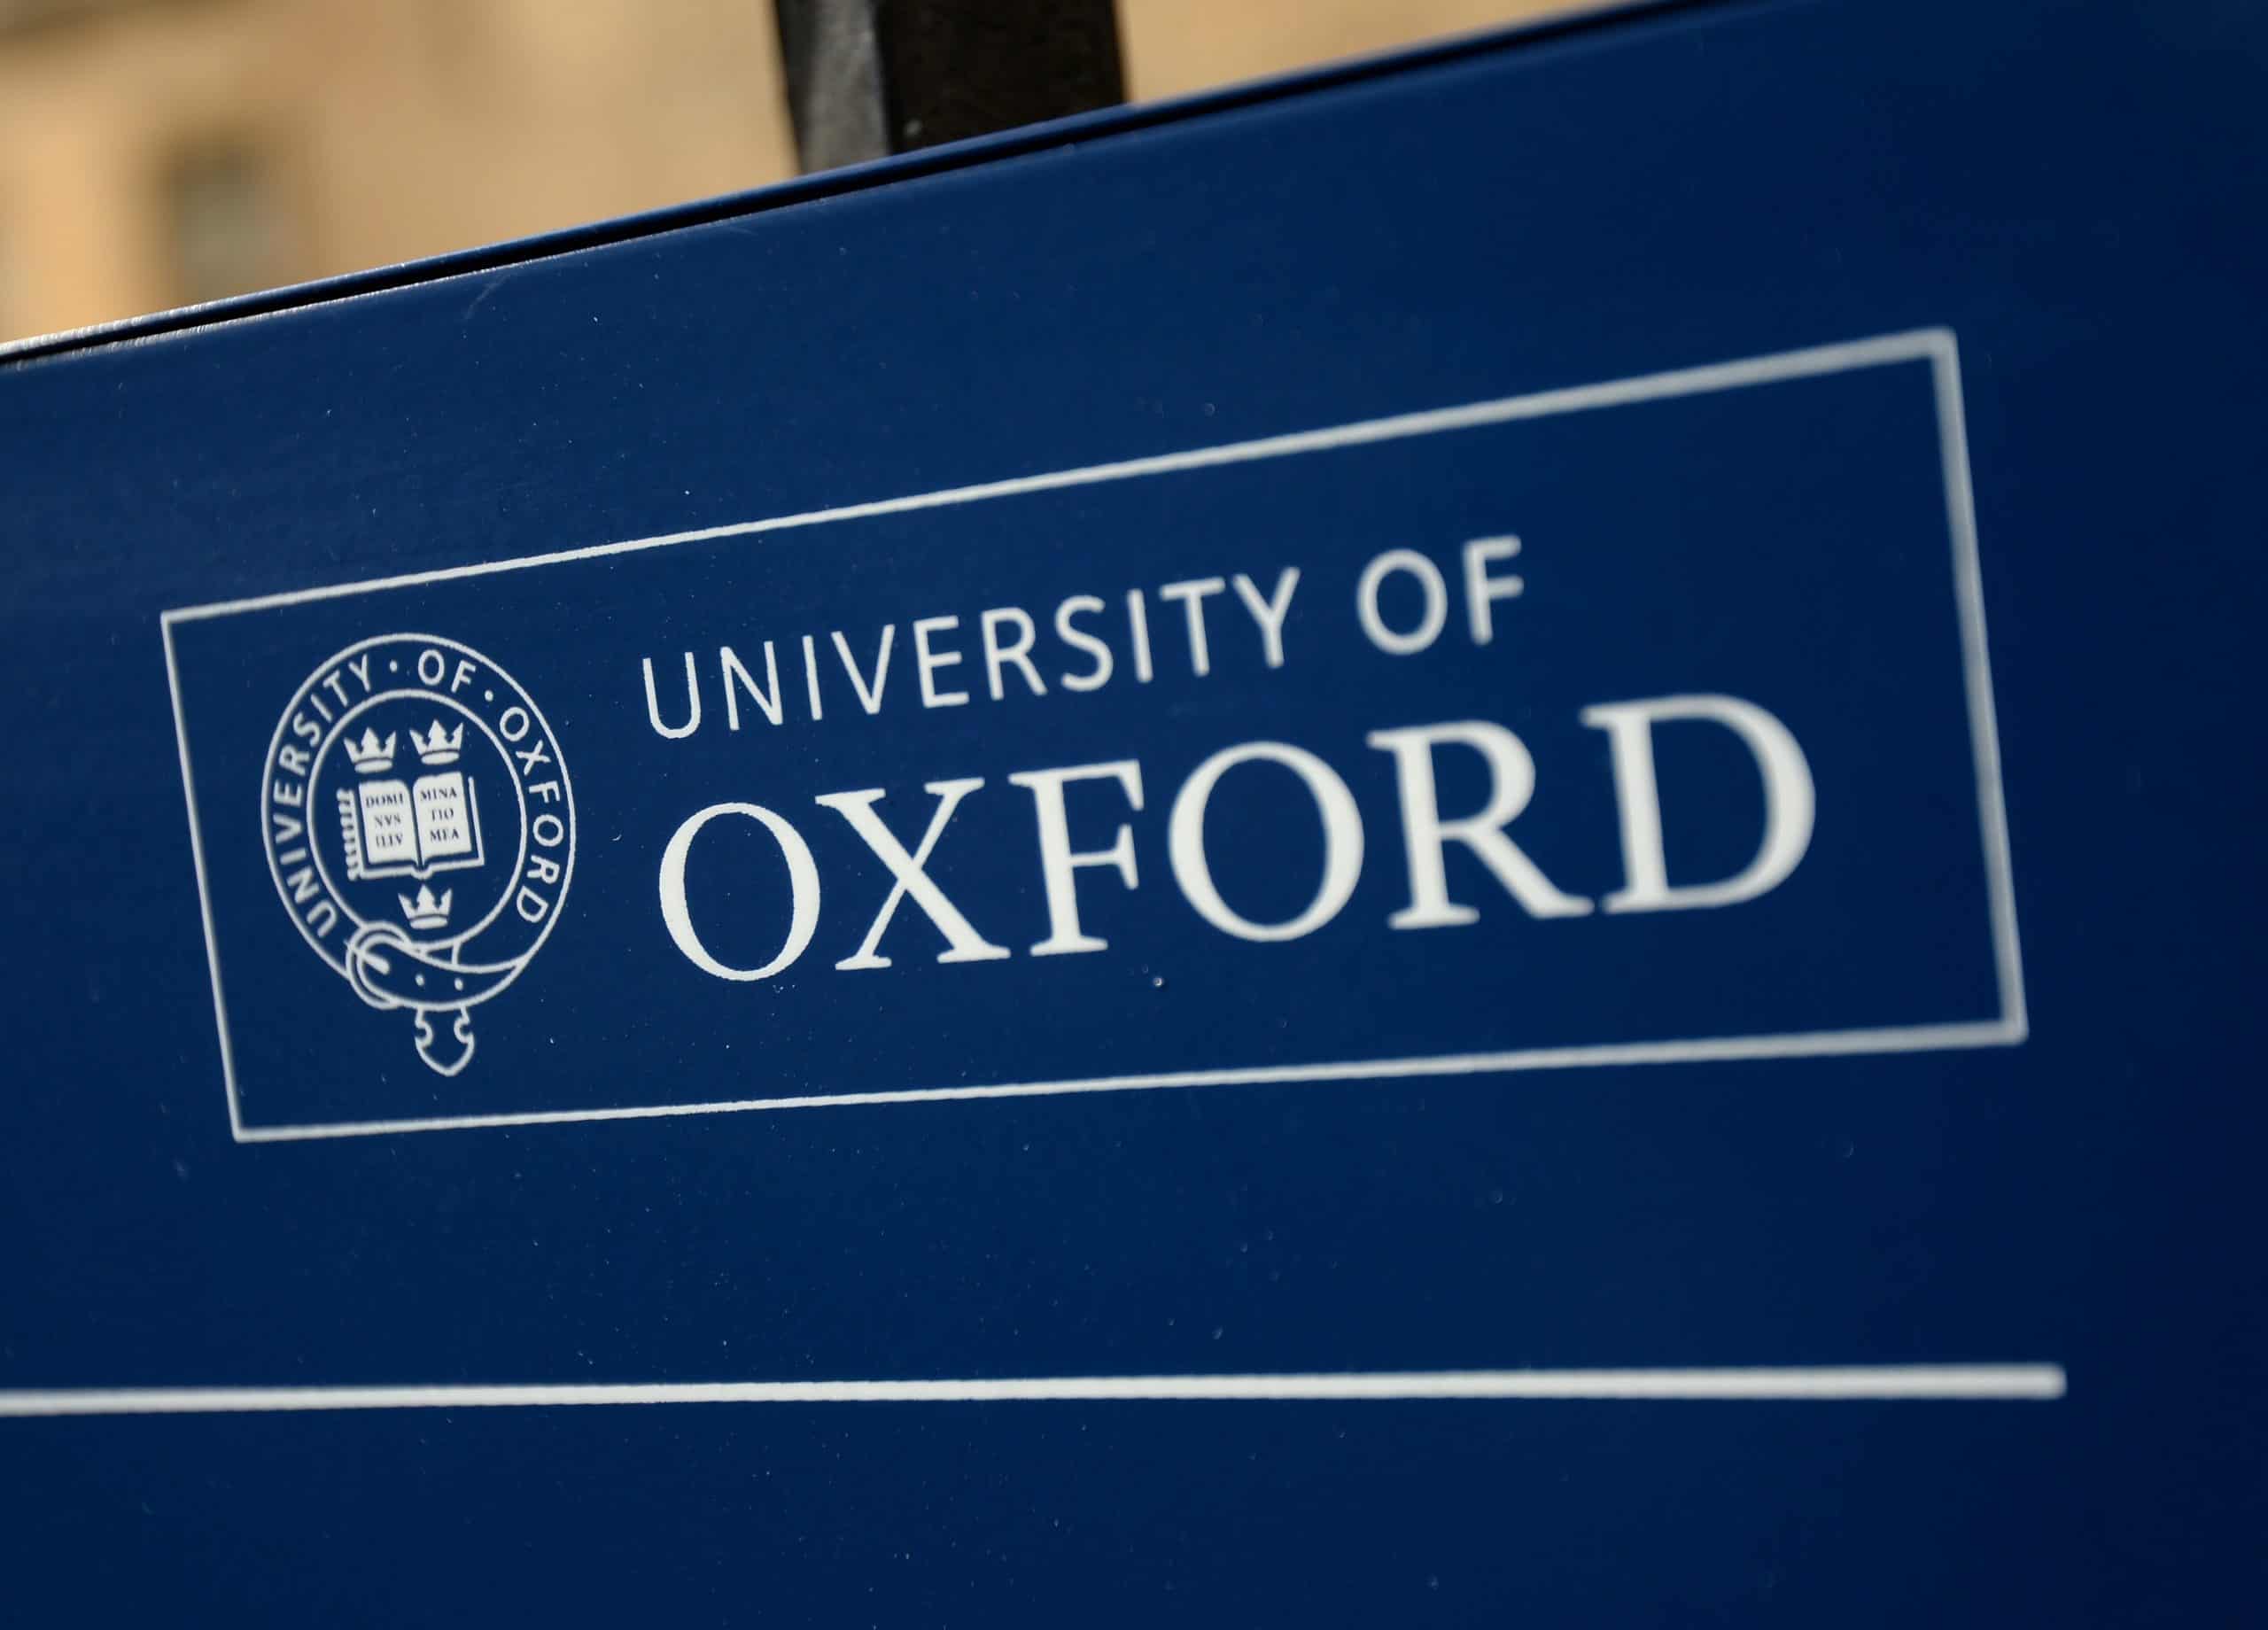 More men named Greg than women in total to speak to Oxford University group